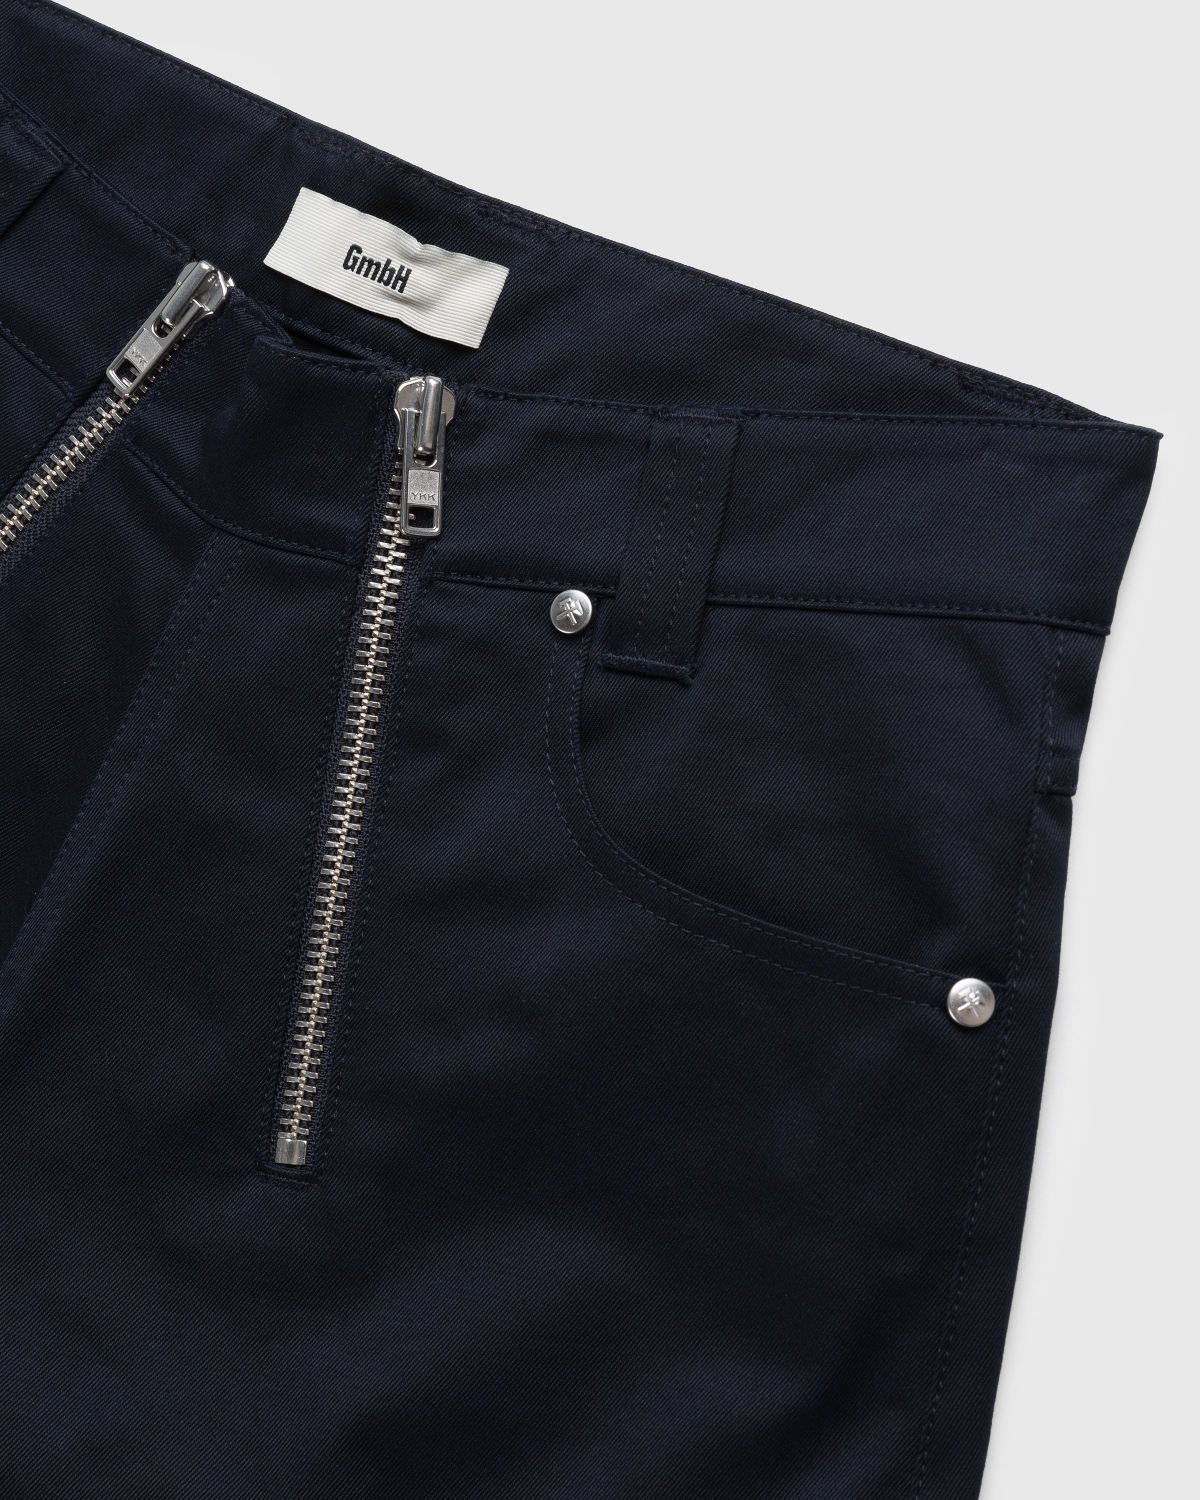 GmbH – Amir Double Zip Shorts Navy - Bermuda Cuts - Blue - Image 5